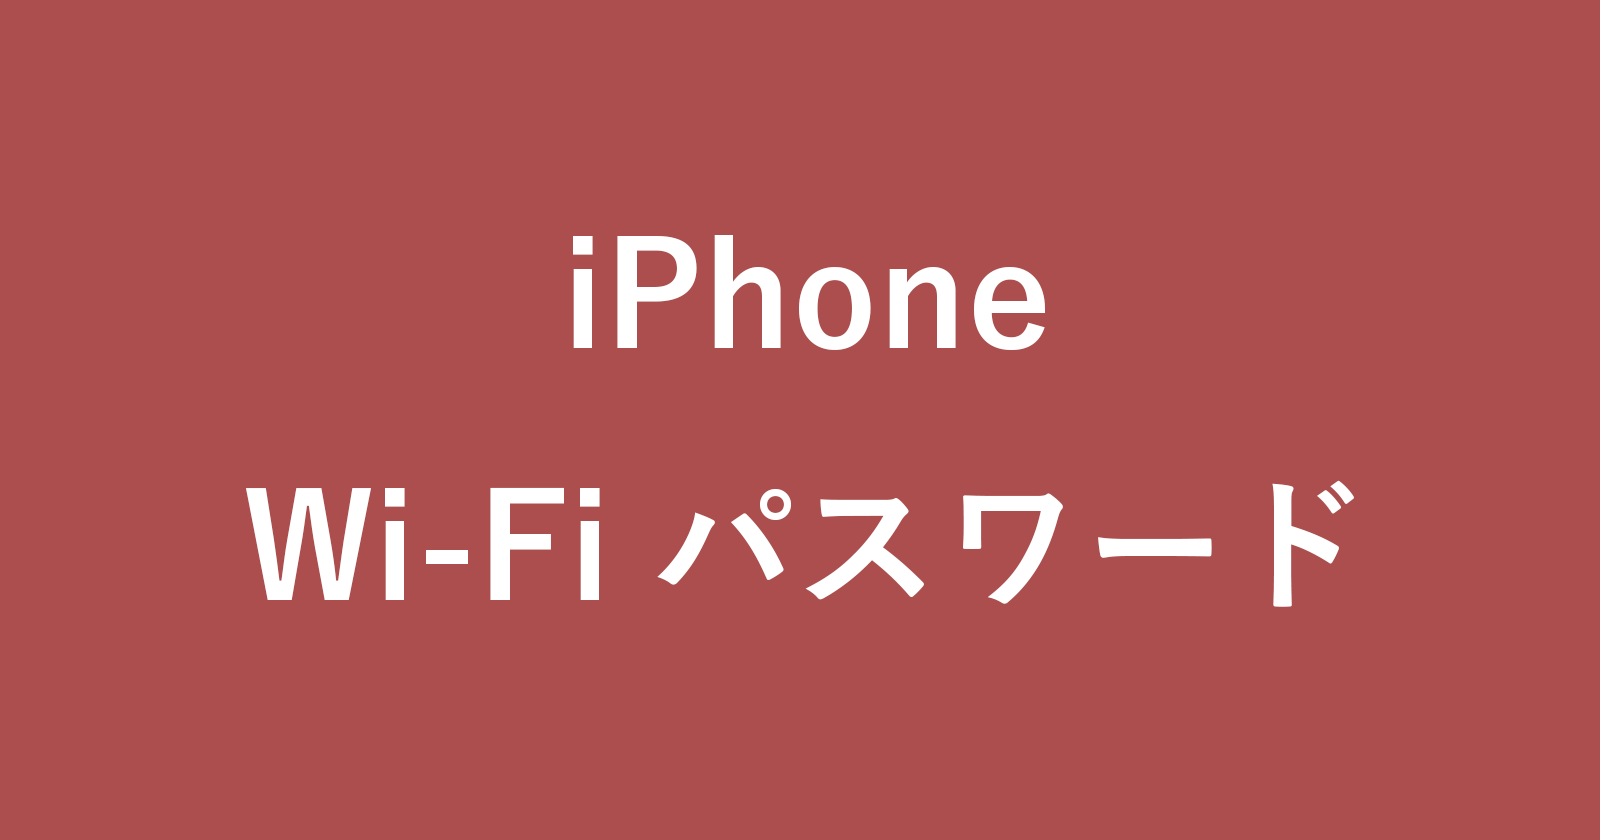 iphone wi fi password